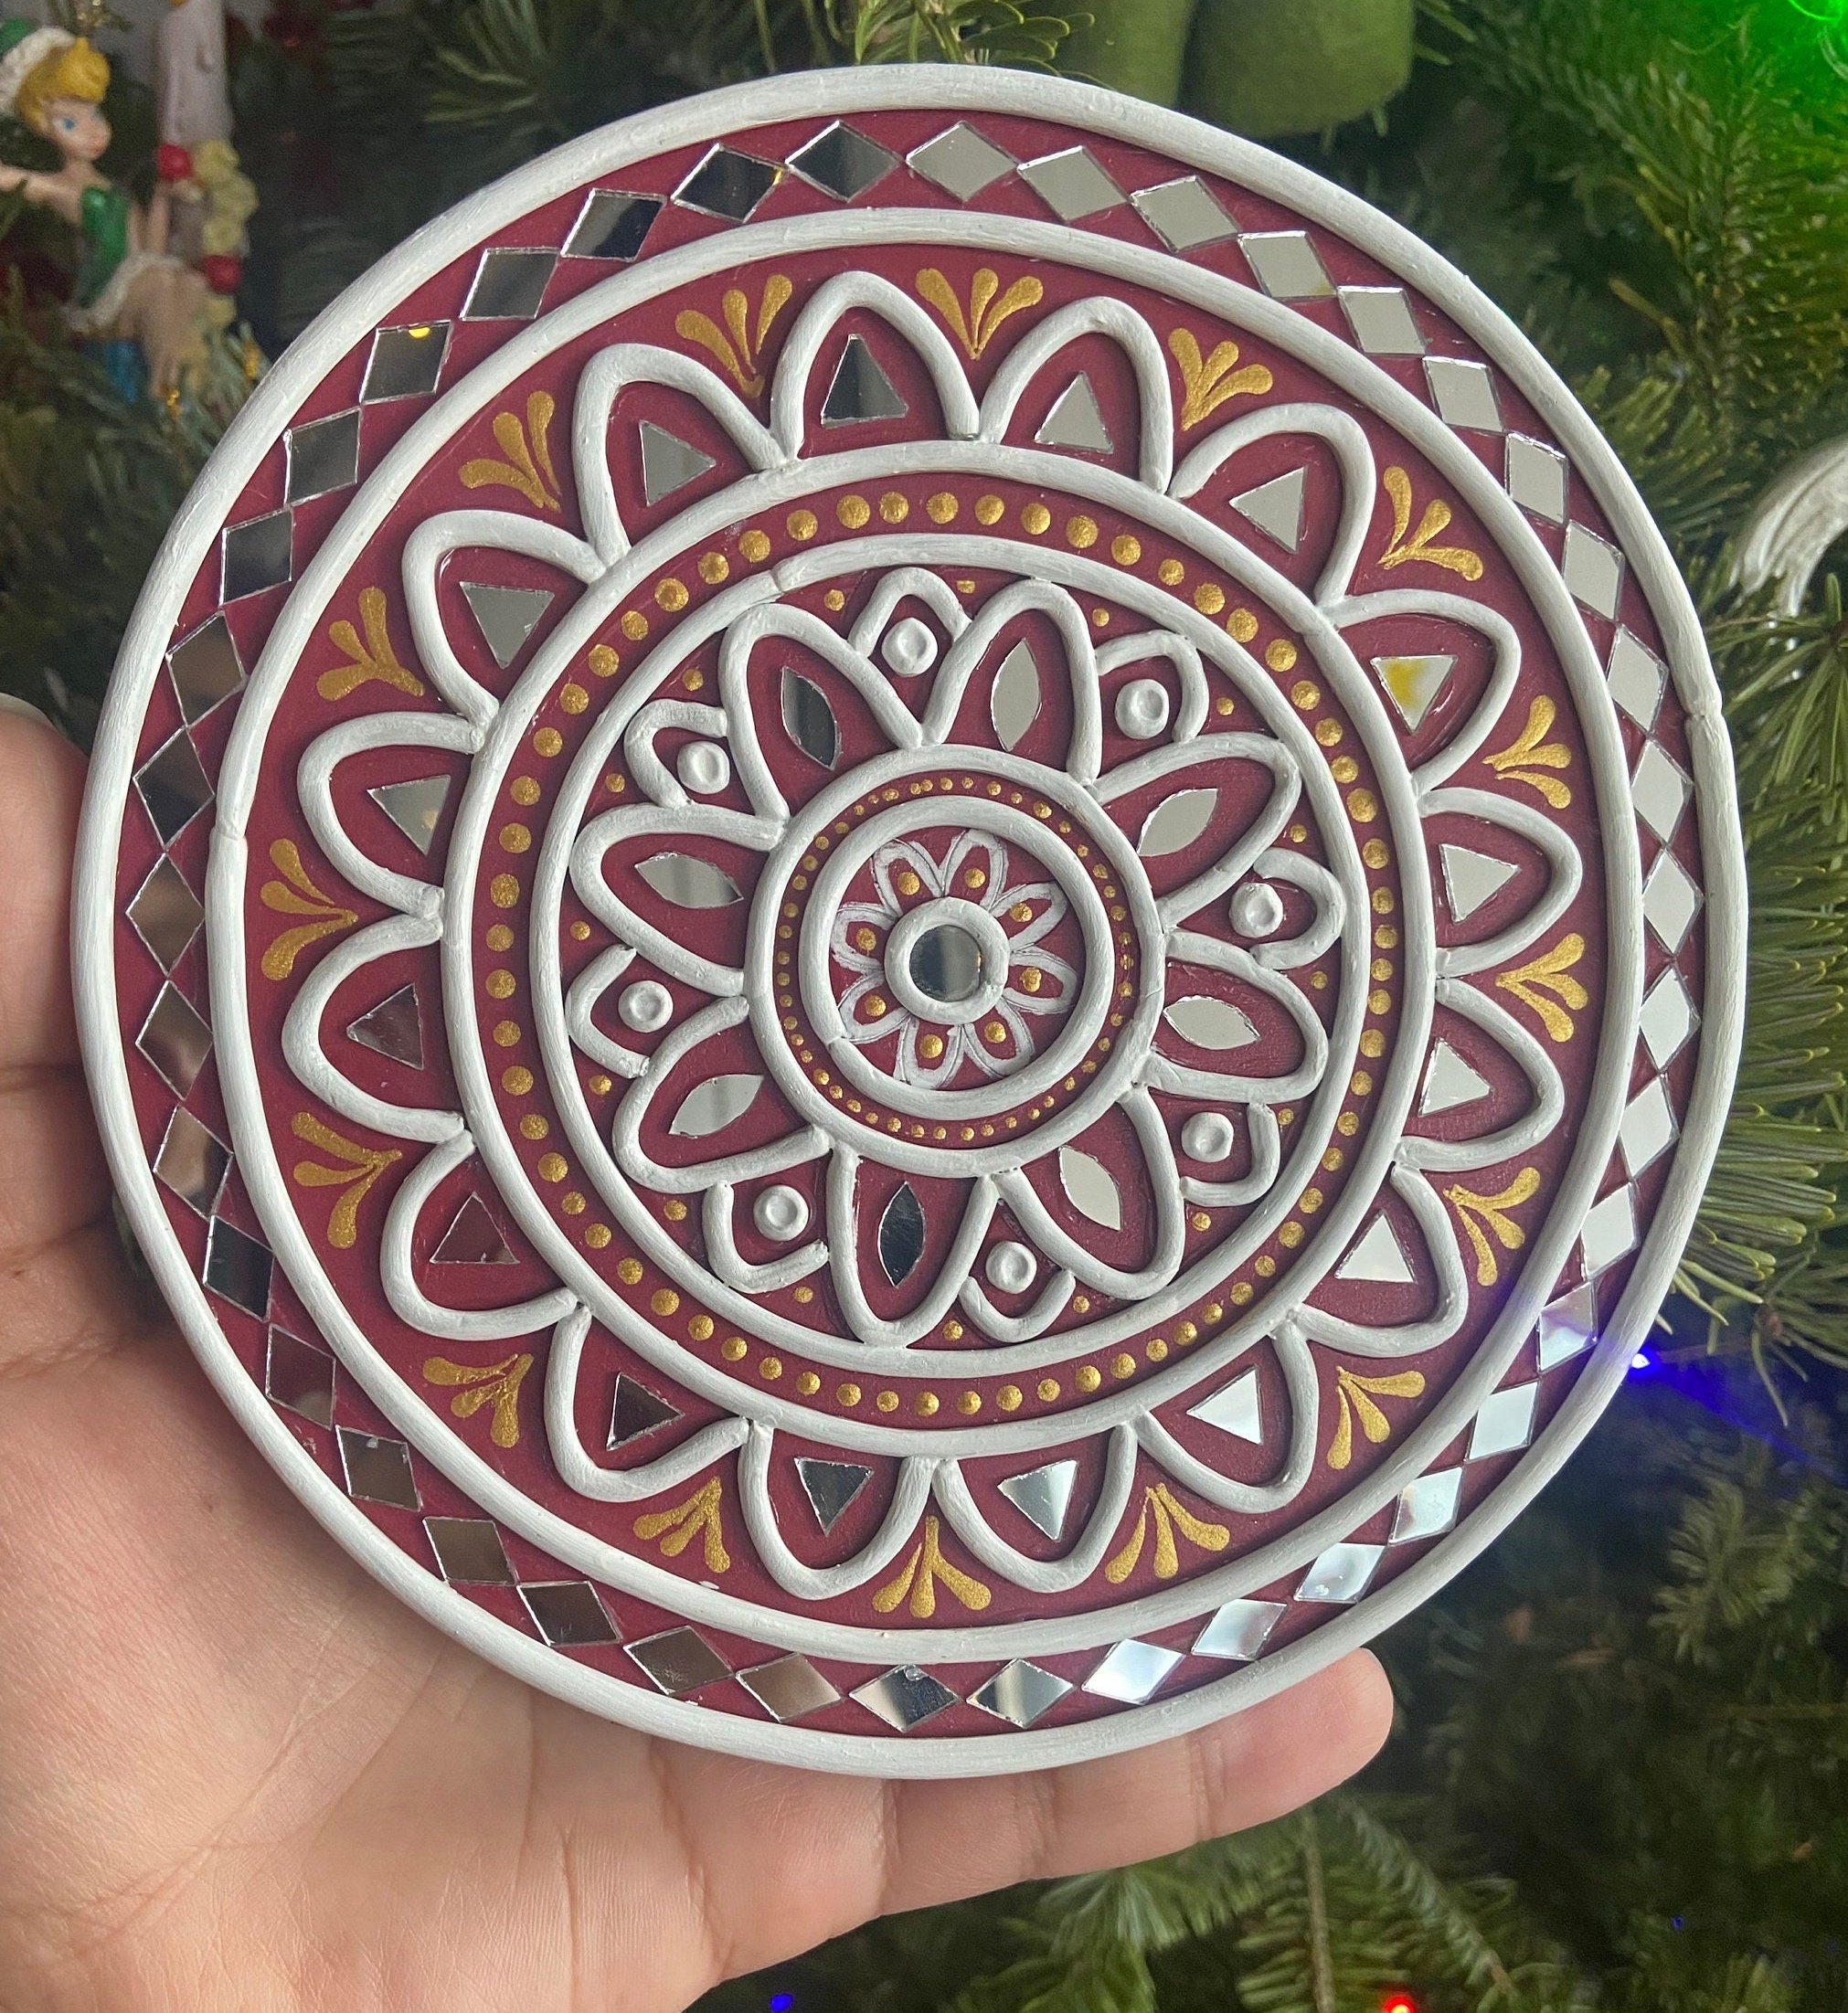 Lippan Art Clay, 10pcs Multi Color Ceramic Cones for Arts & Crafts, Lippan  Art, Mandana Art, Pottery, Liner, DIY Decorative, Lippan Art Kit 